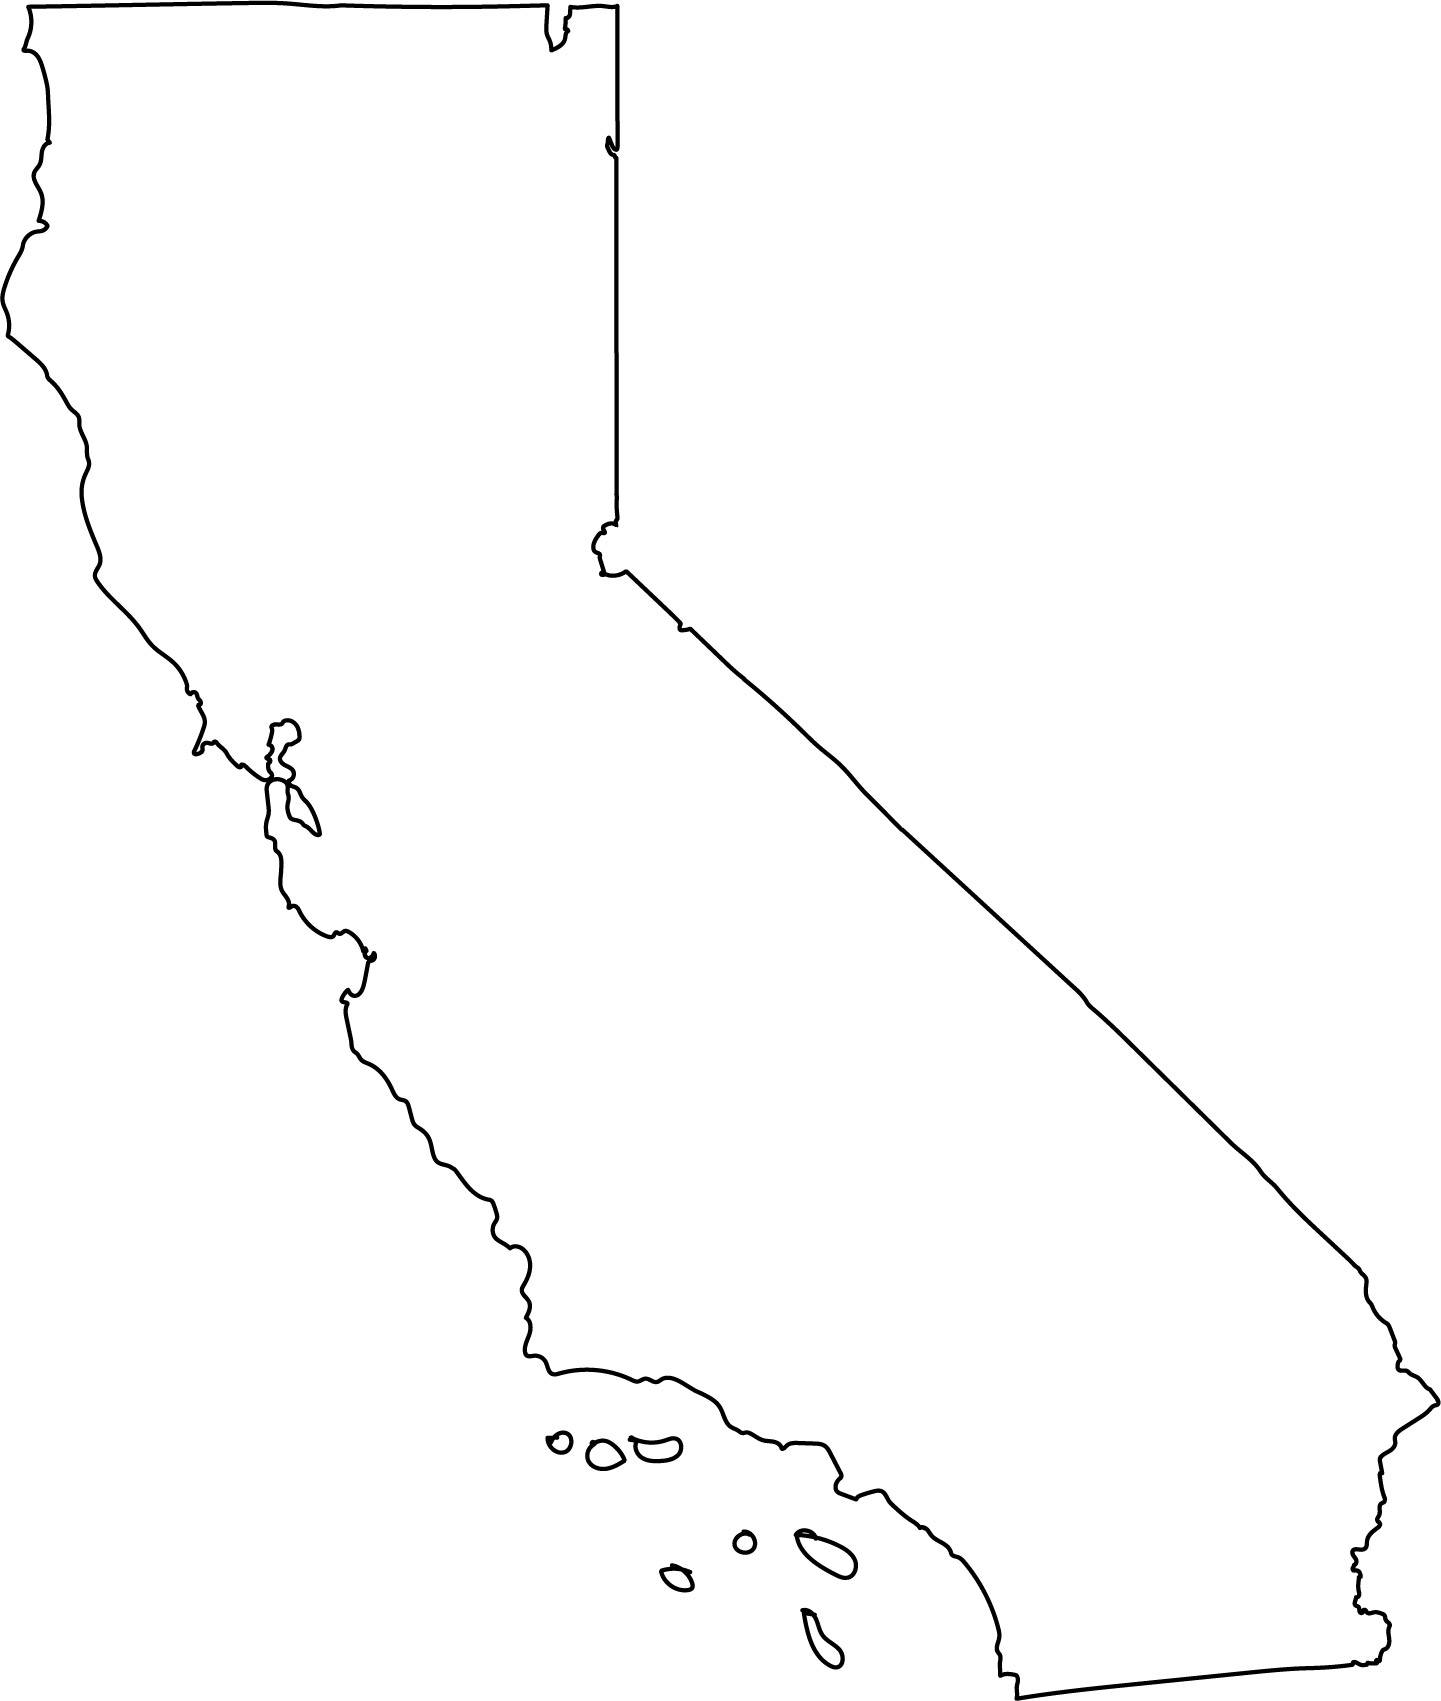 california clipart line